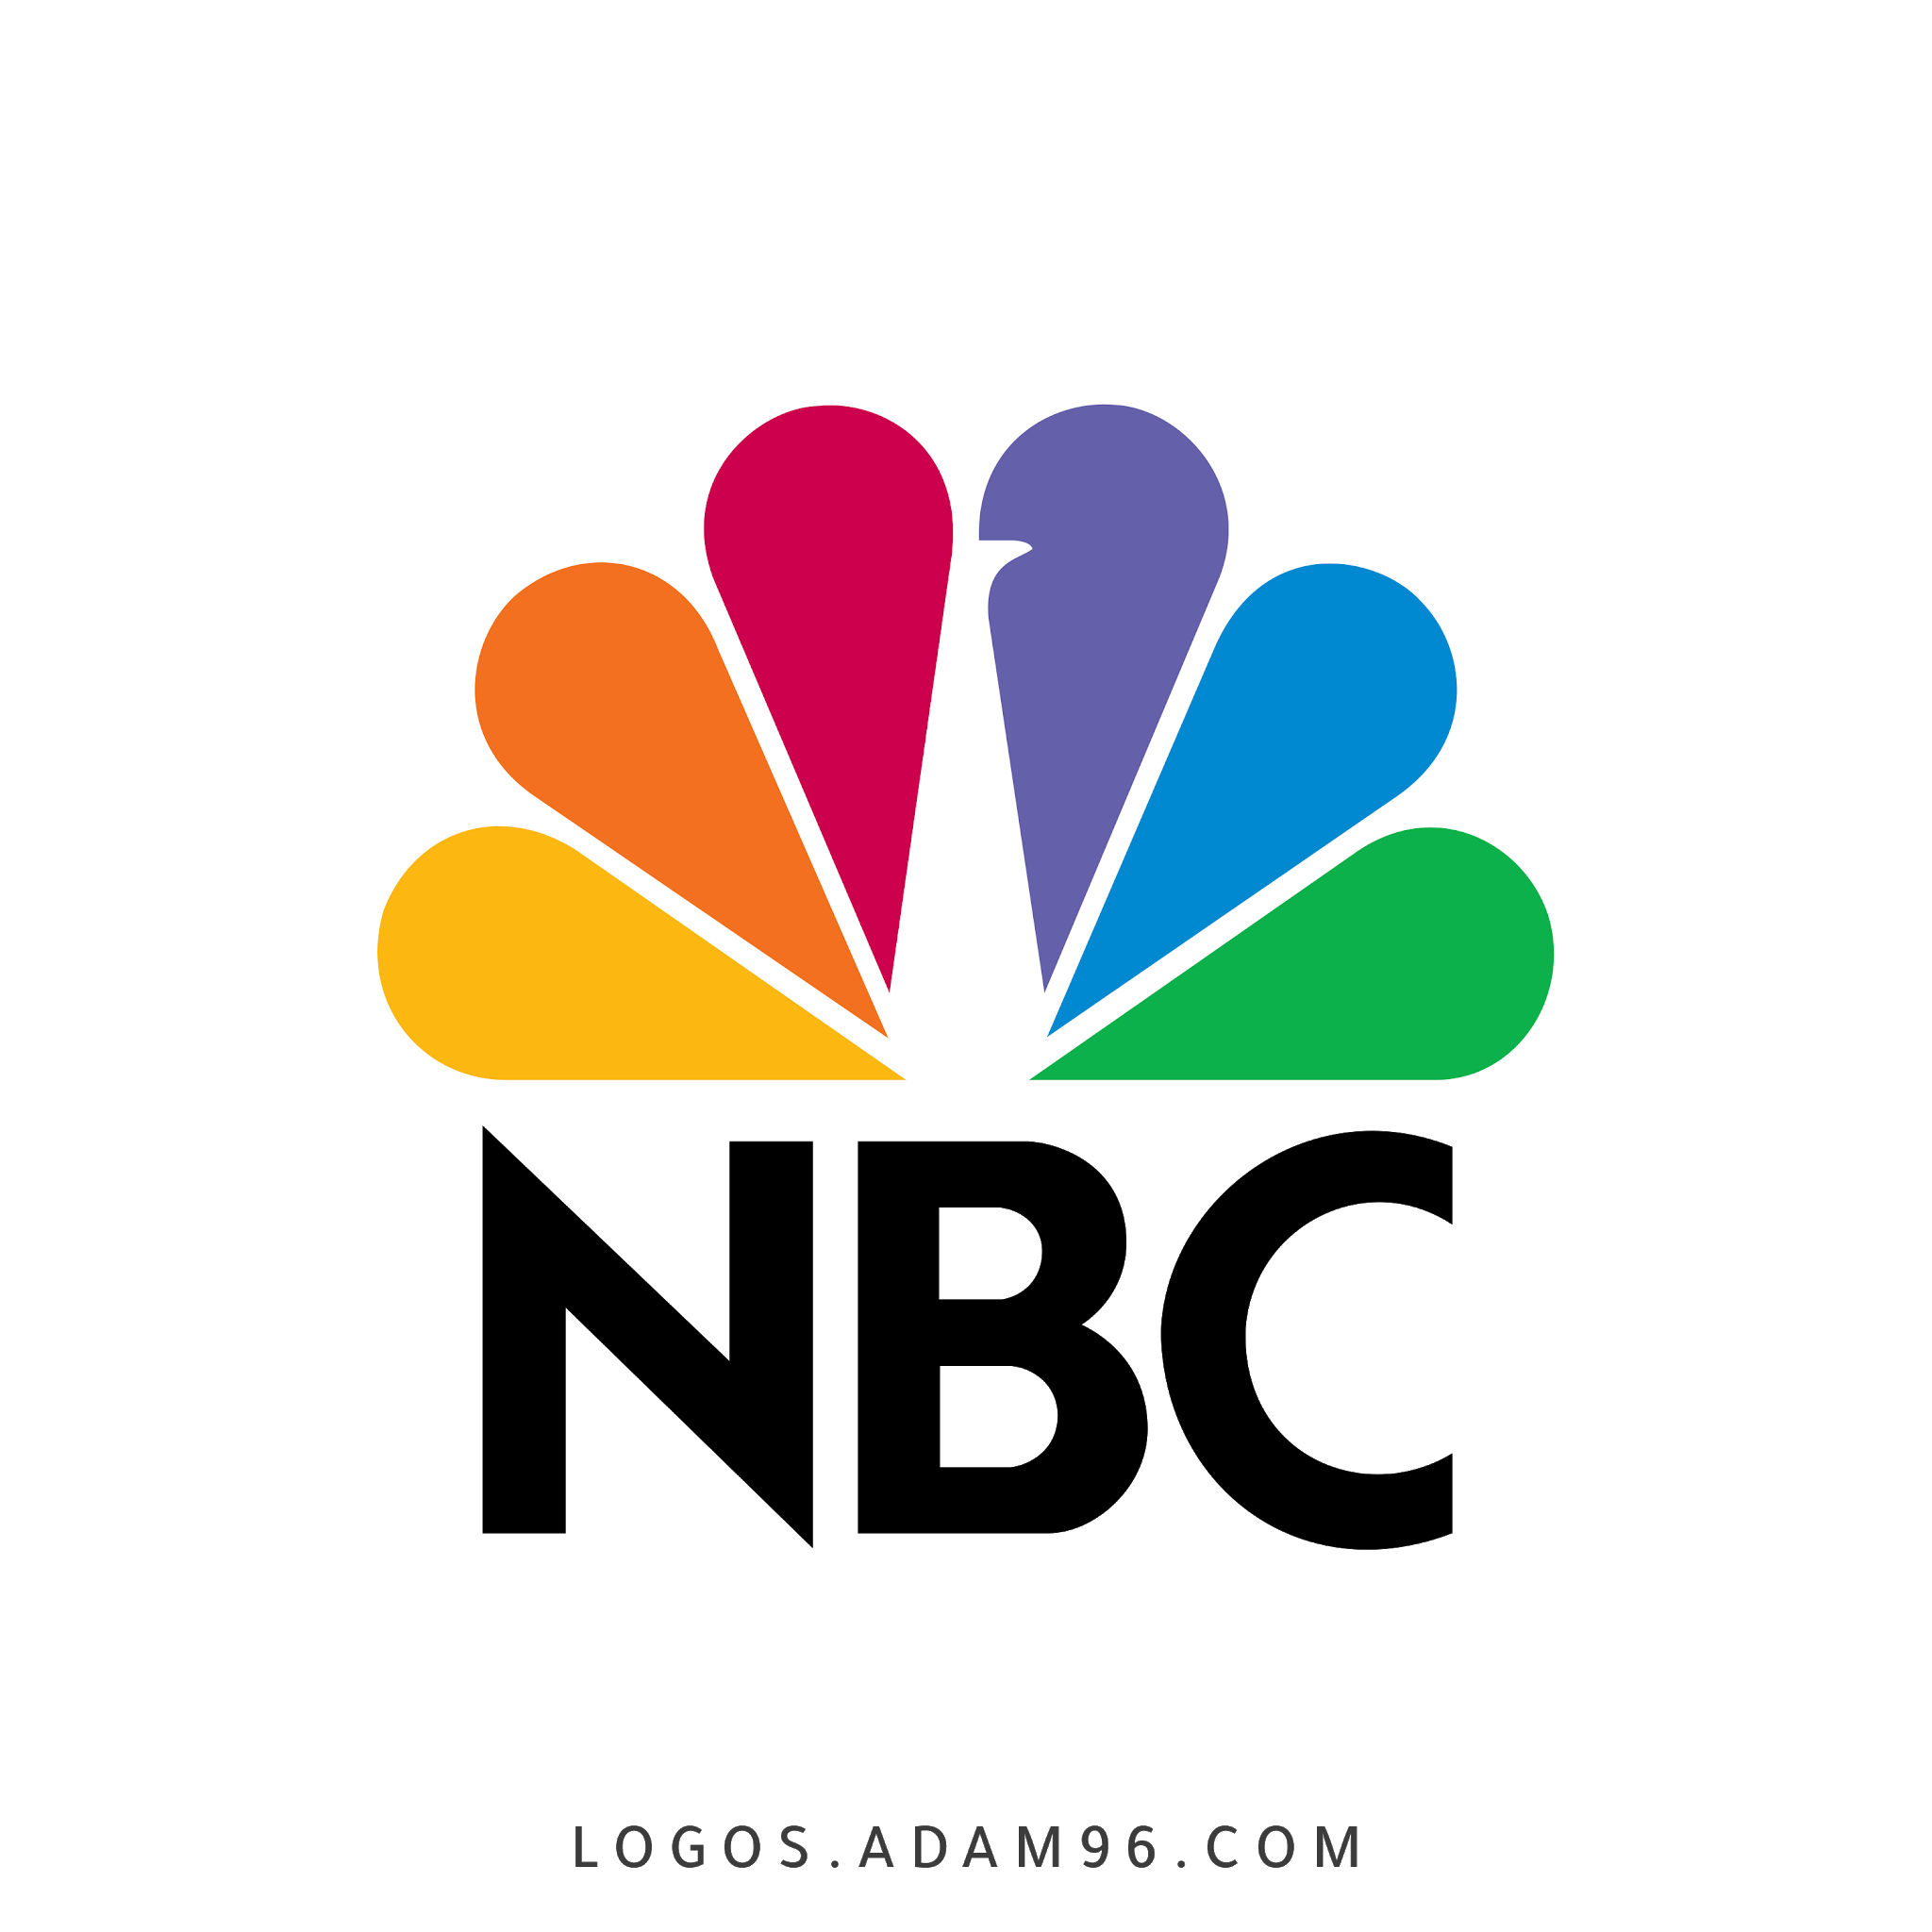 Download Logo NBC News PNG - Free Vector